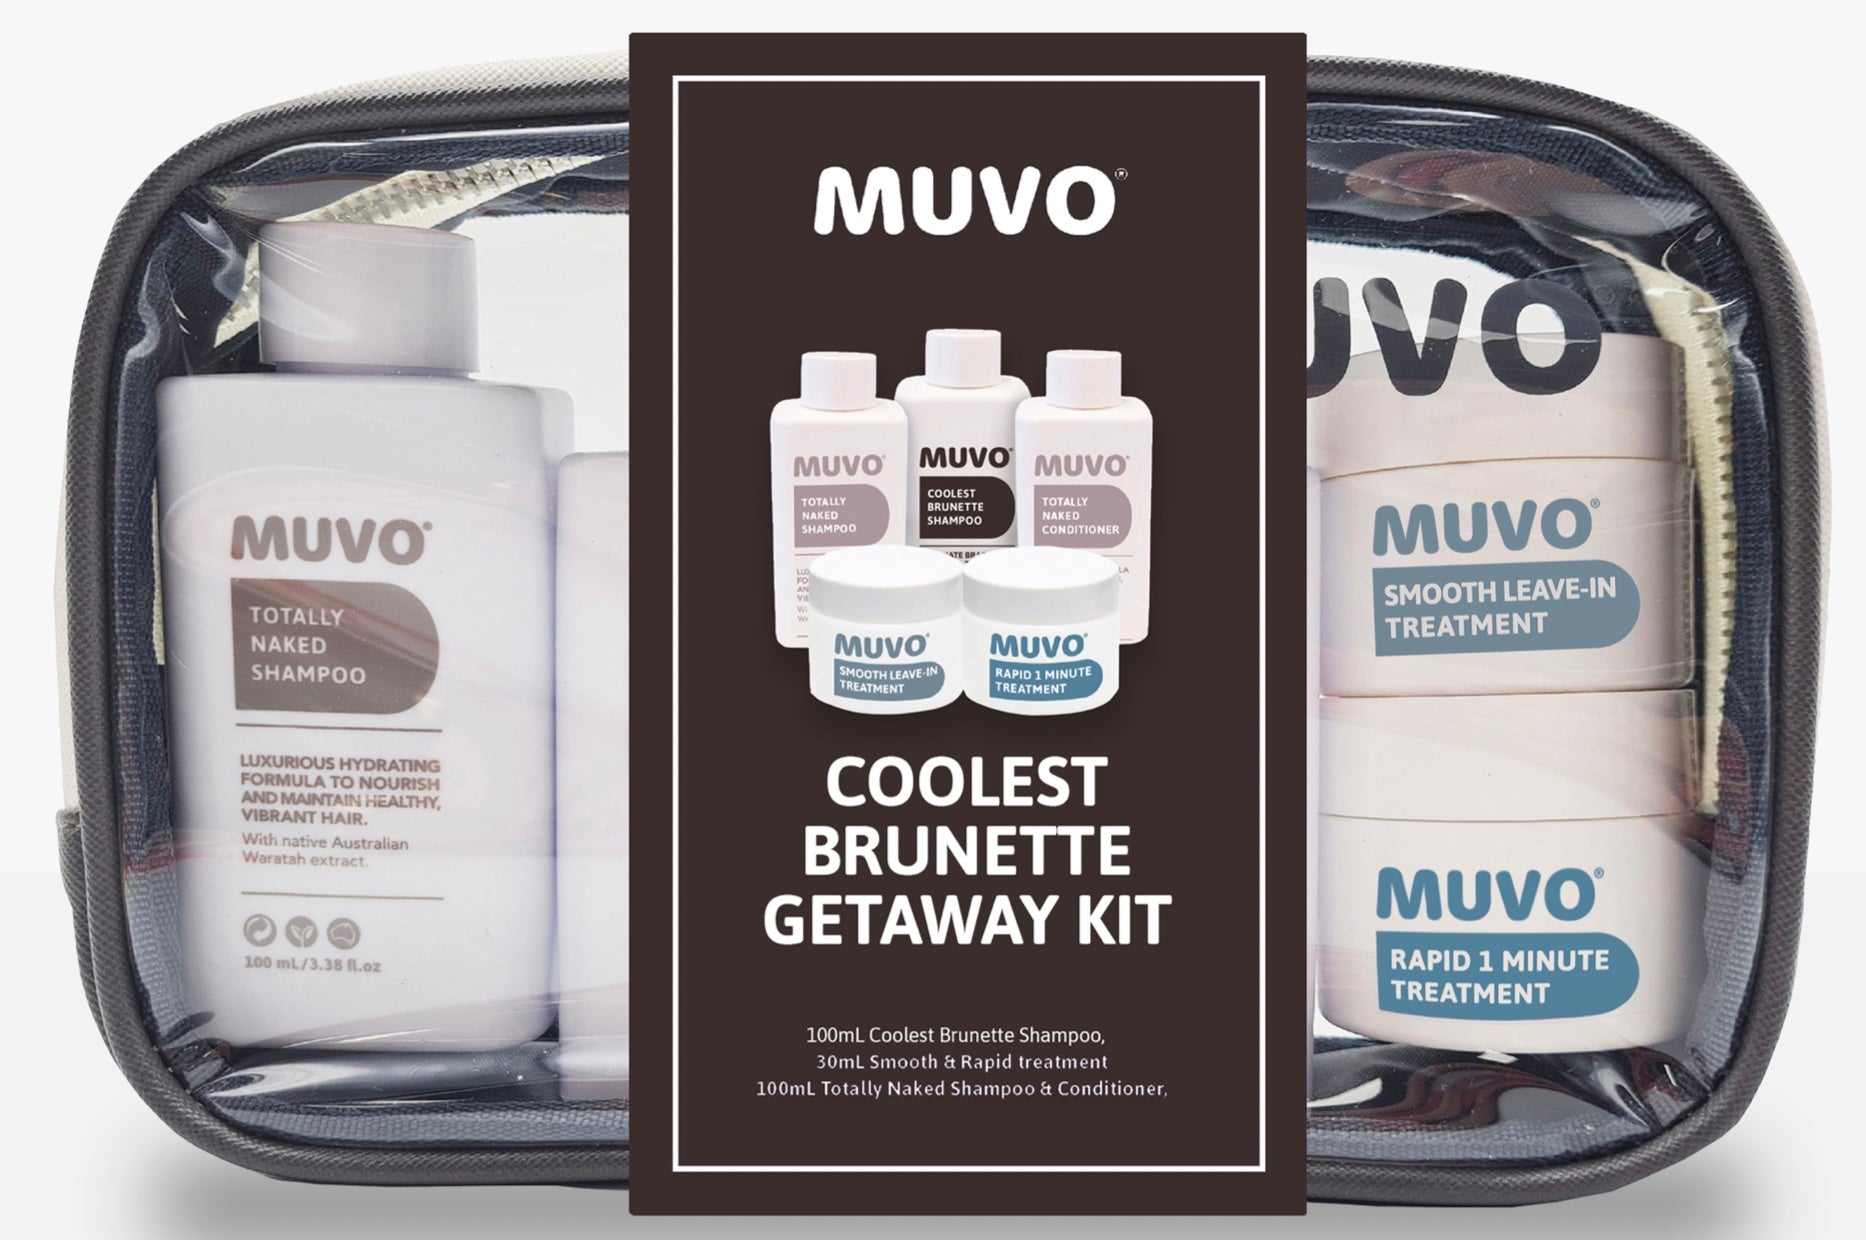 MUVO Coolest Brunette Getaway Kit